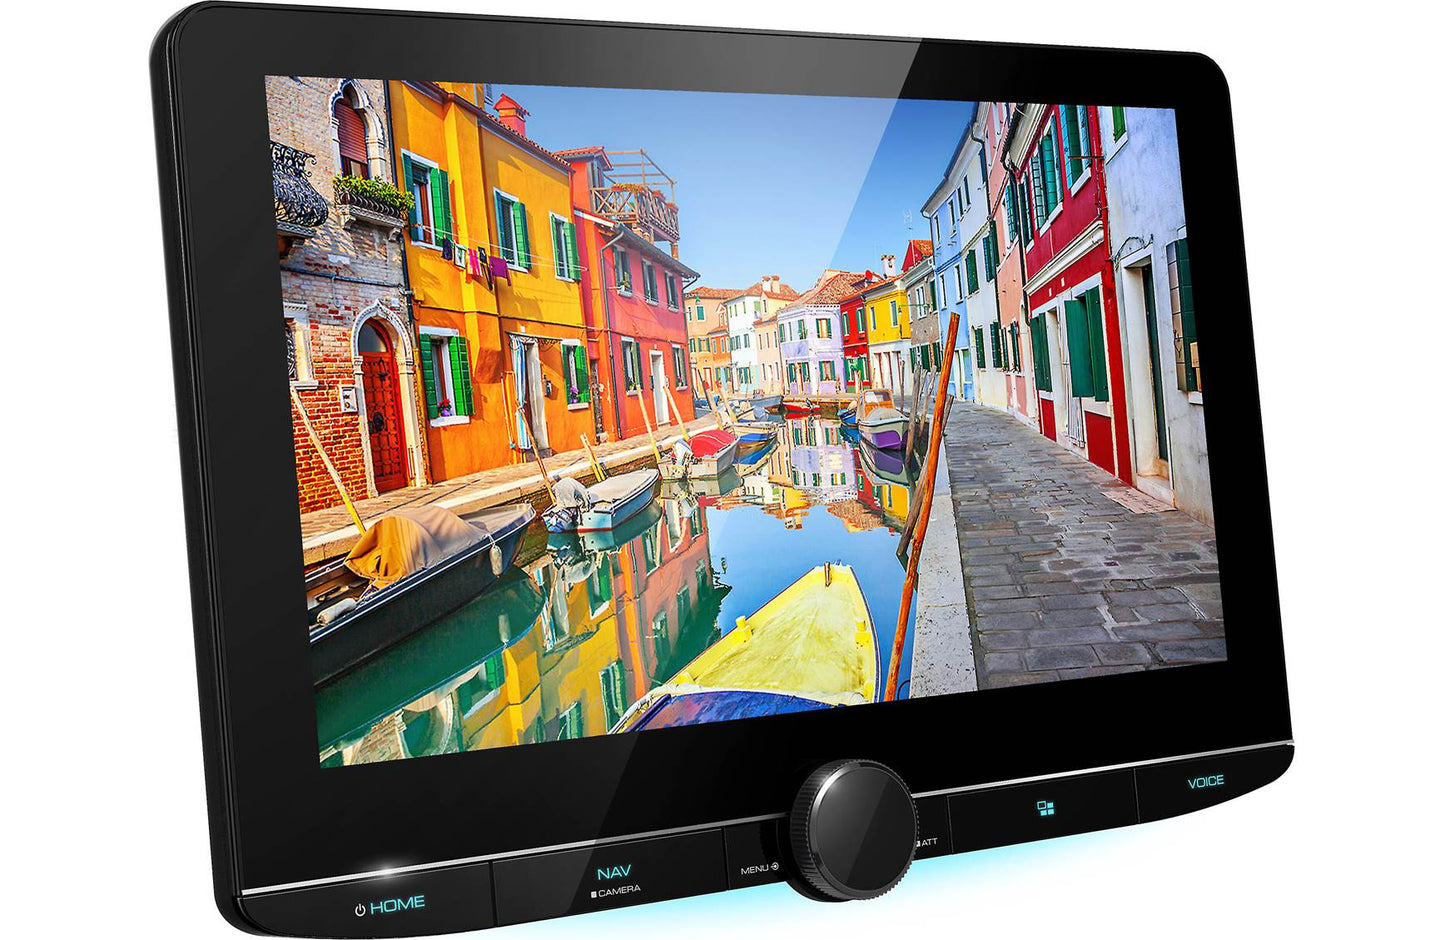 Kenwood DNR1007XR 10.1" Wireless Apple CarPlay Android Auto Car Stereo + CMOS-320HDLP Backup Camera